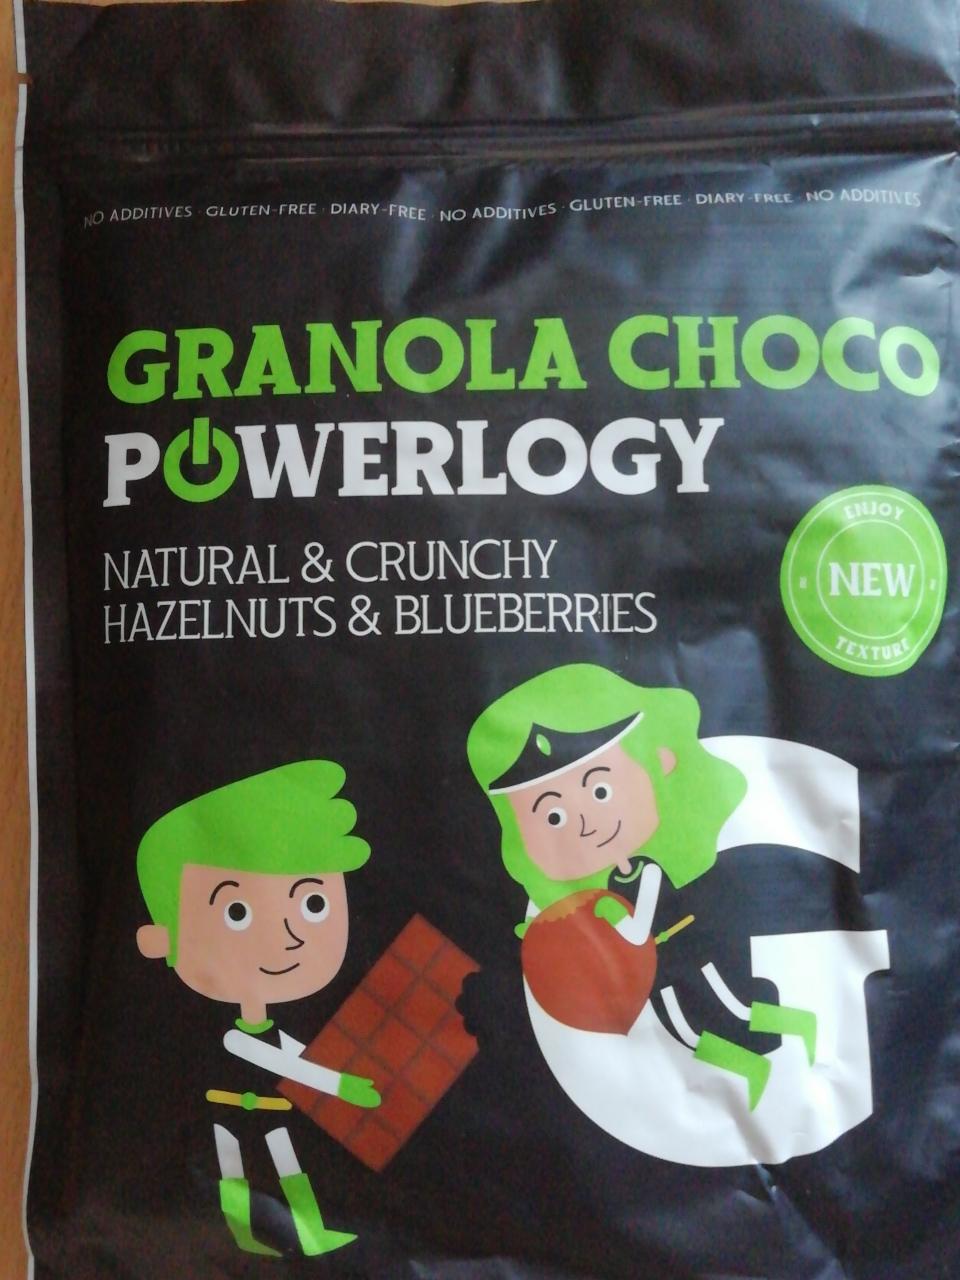 Fotografie - Granola Choco Natural & Crunchy Hazelnuts & Blueberries Powerlogy